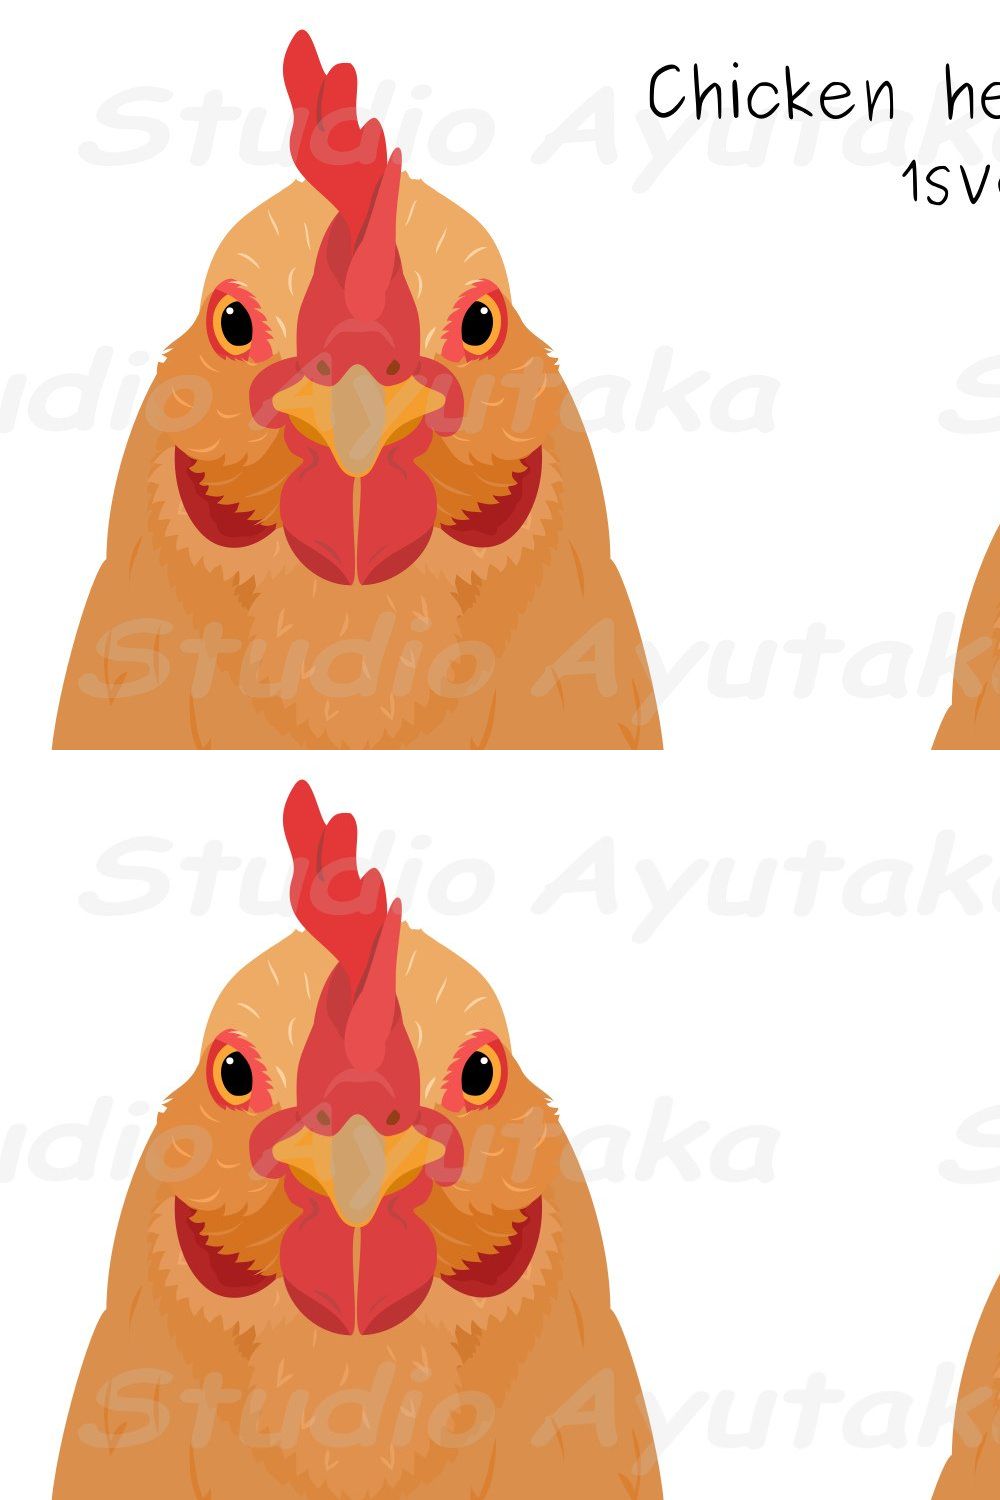 brown chicken hen peeking design pinterest preview image.